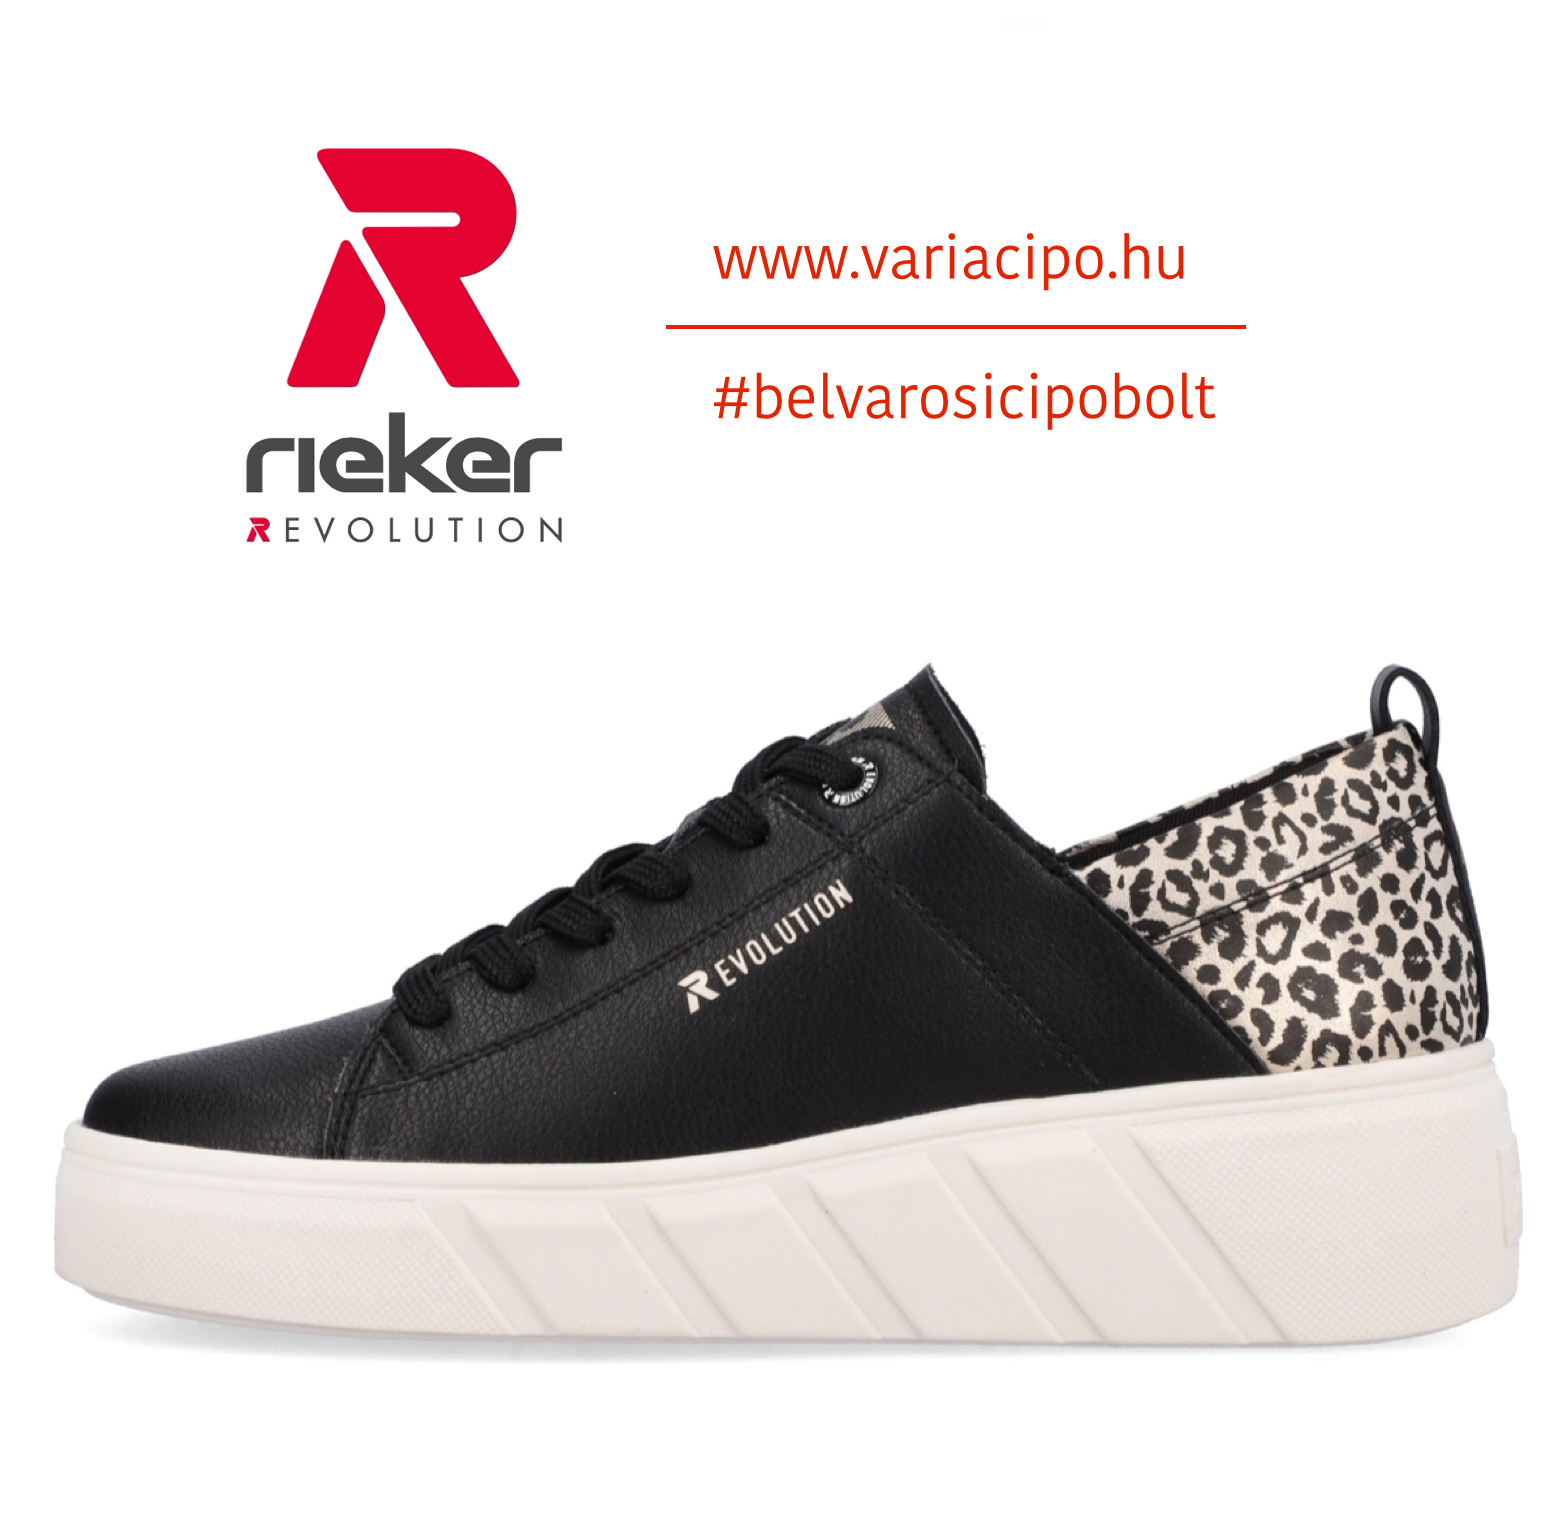 Rieker R-Evolution sportos női cipő, W0502-00 black comb.